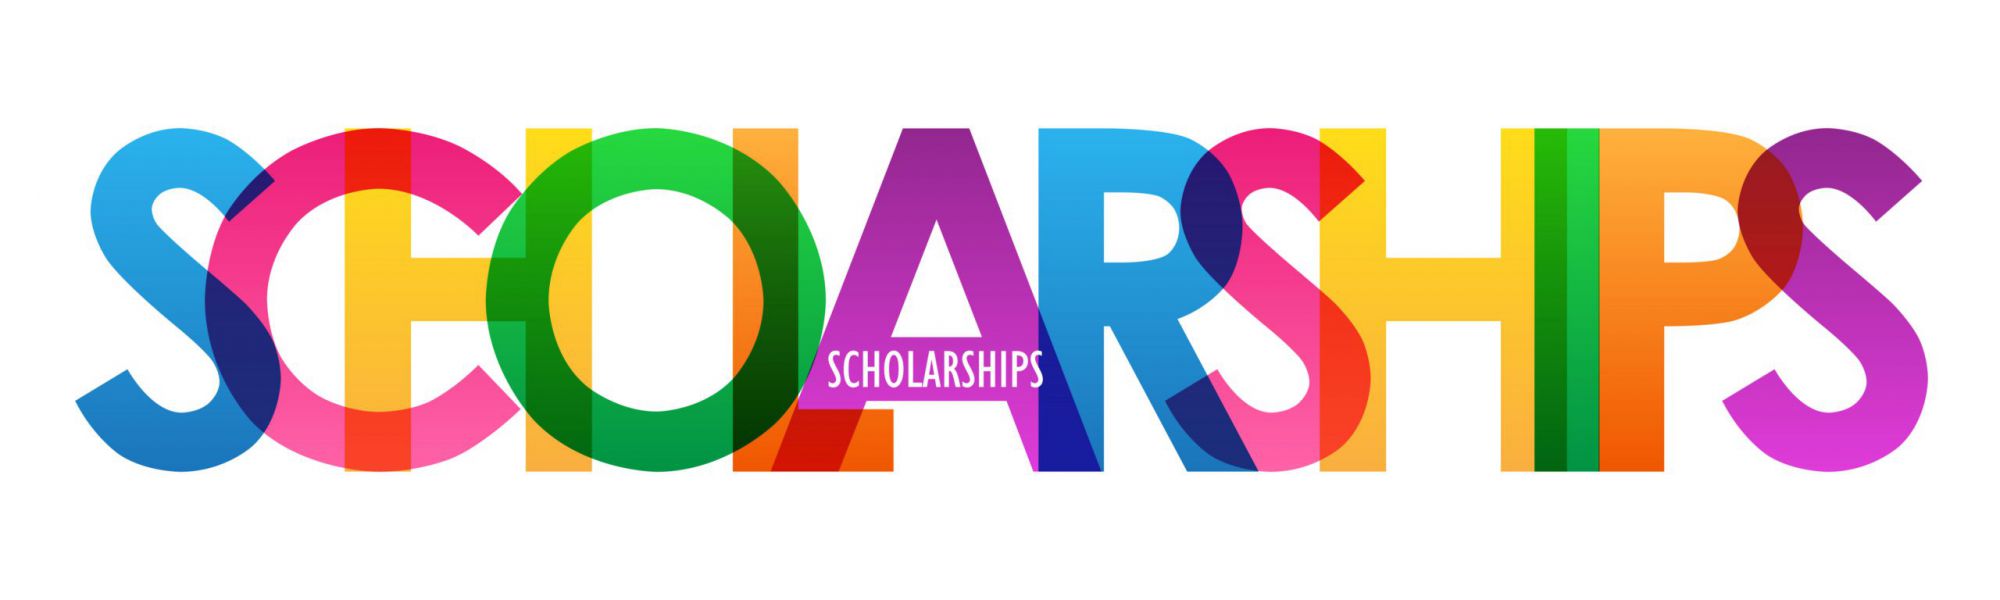 Chamberlain Scholarship Application Deadline Oct 15 AFP NC Cape Fear